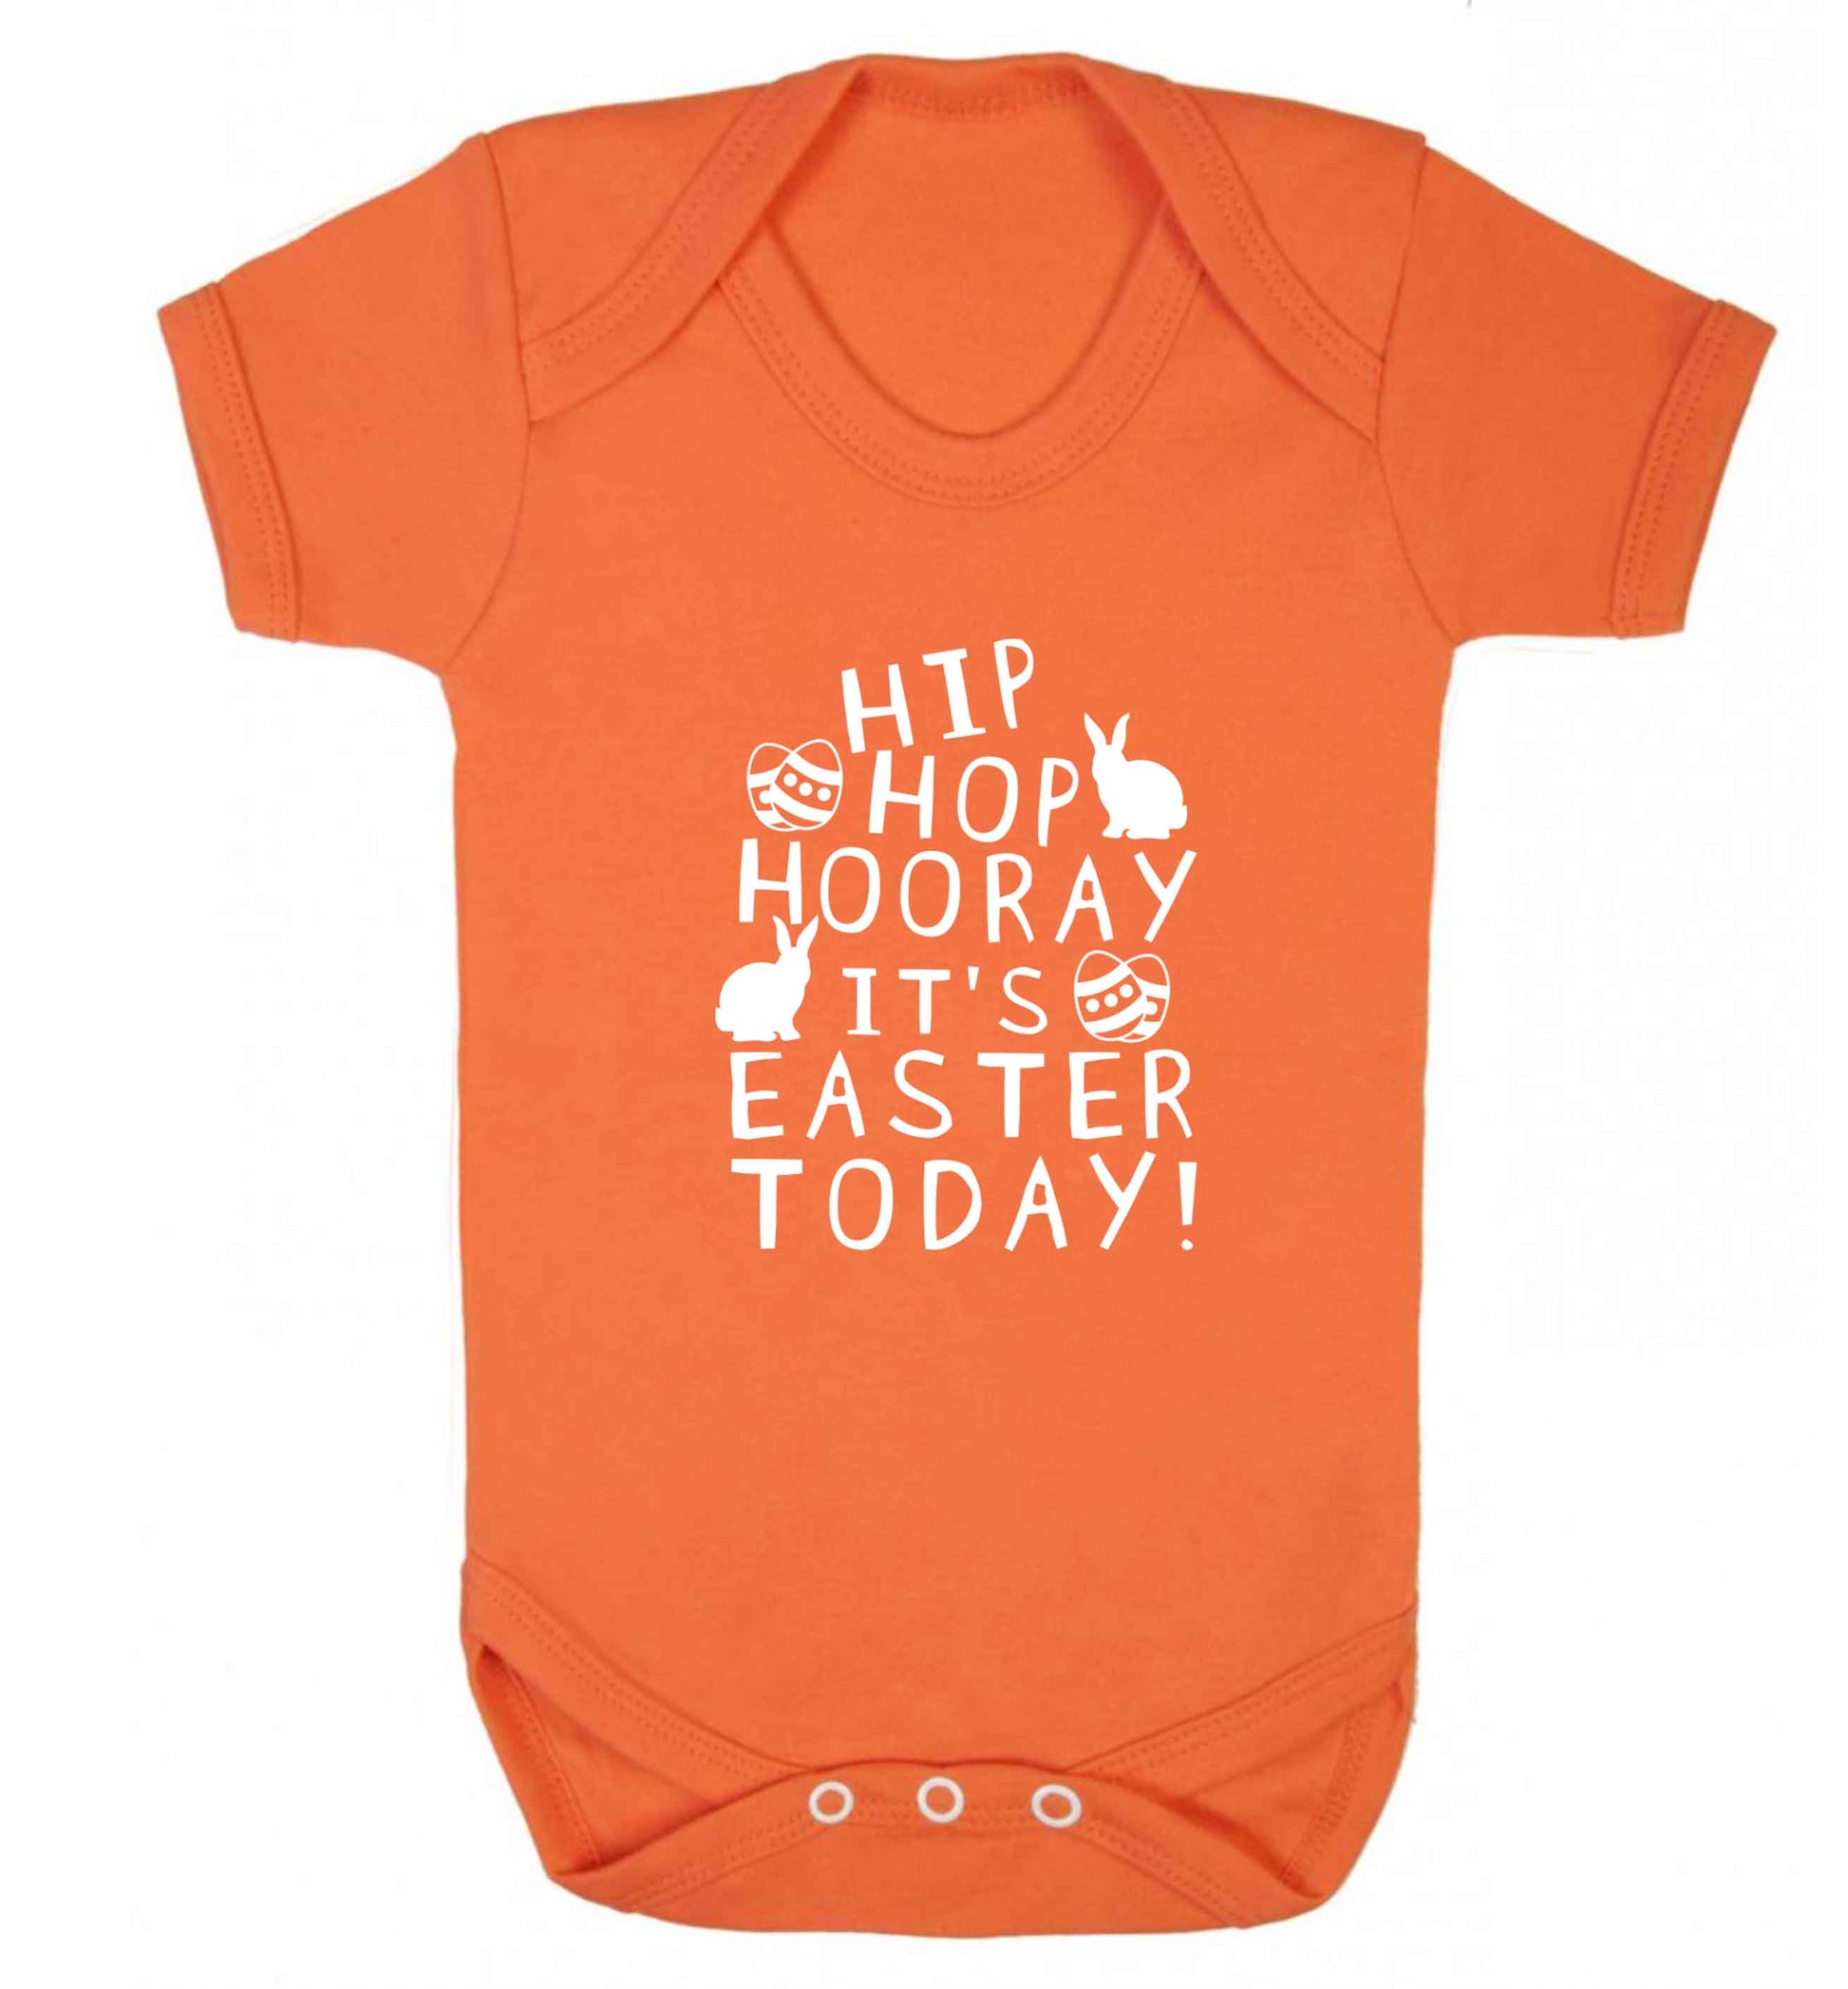 Hip hip hooray it's Easter today! baby vest orange 18-24 months